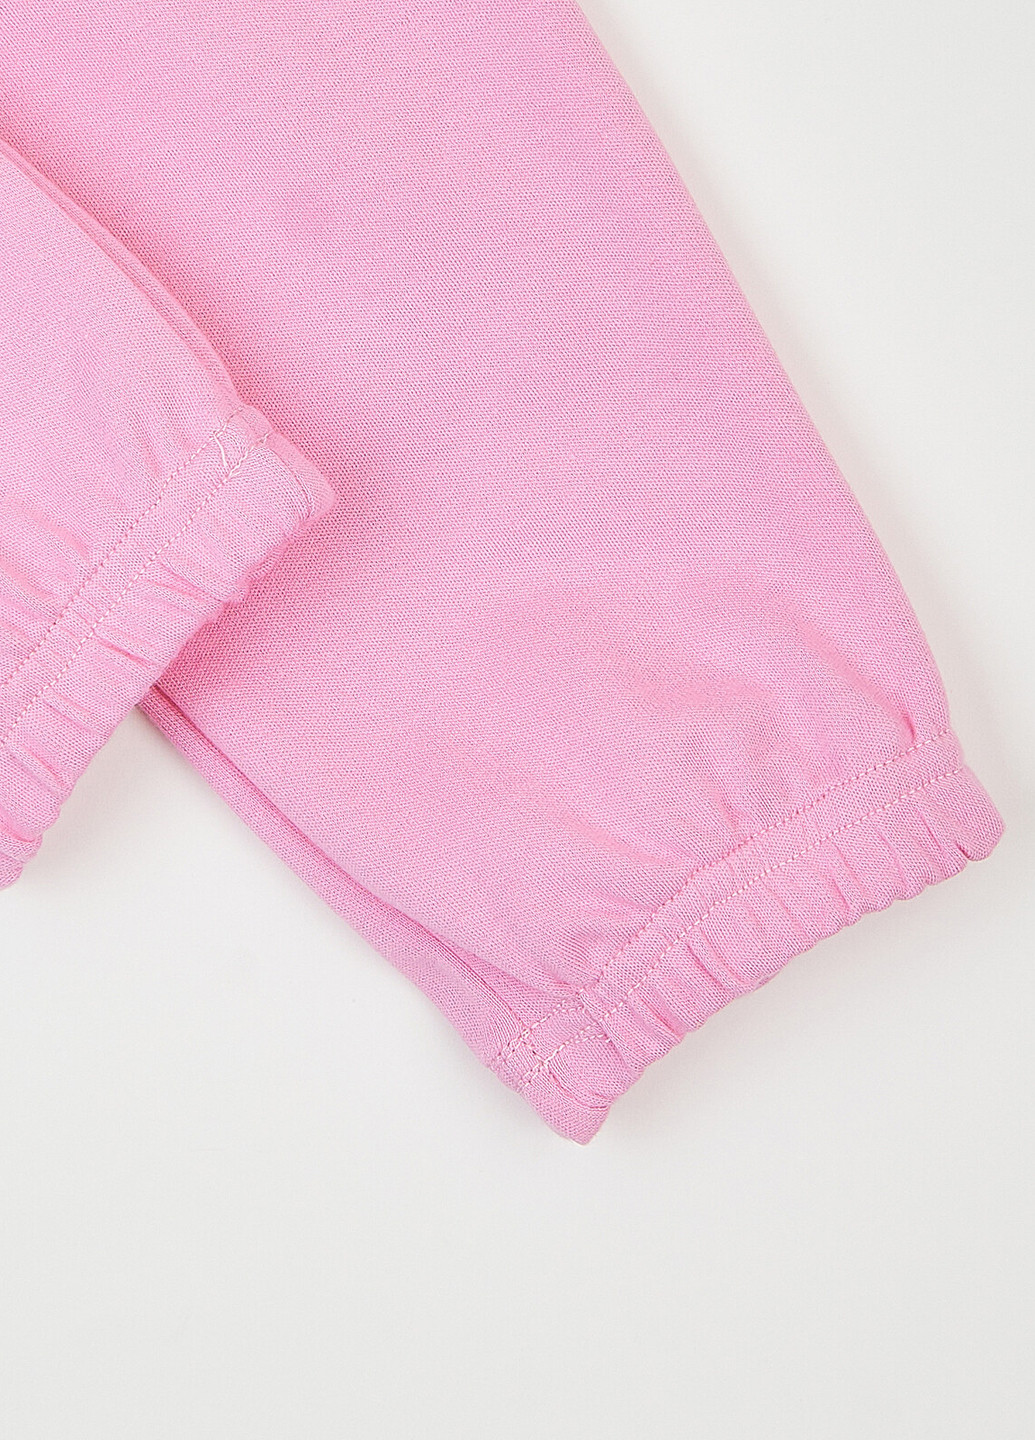 Розовая всесезон пижама (свитшот, брюки) свитшот + брюки Ляля